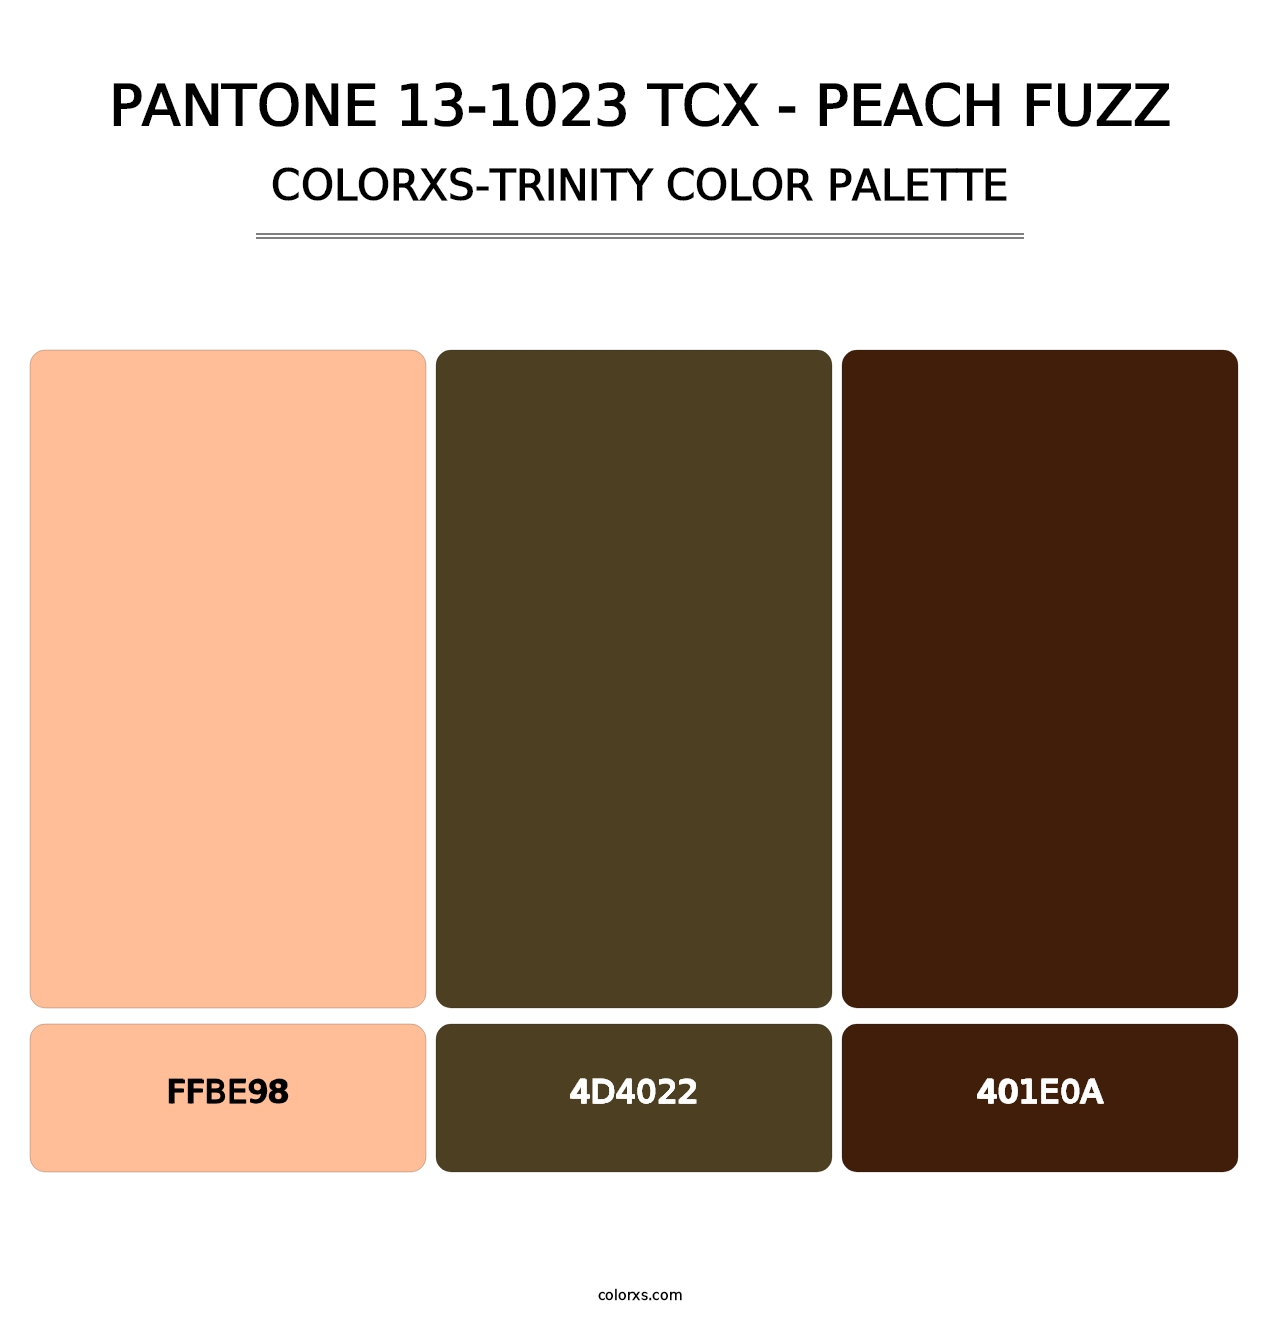 PANTONE 13-1023 TCX - Peach Fuzz - Colorxs Trinity Palette